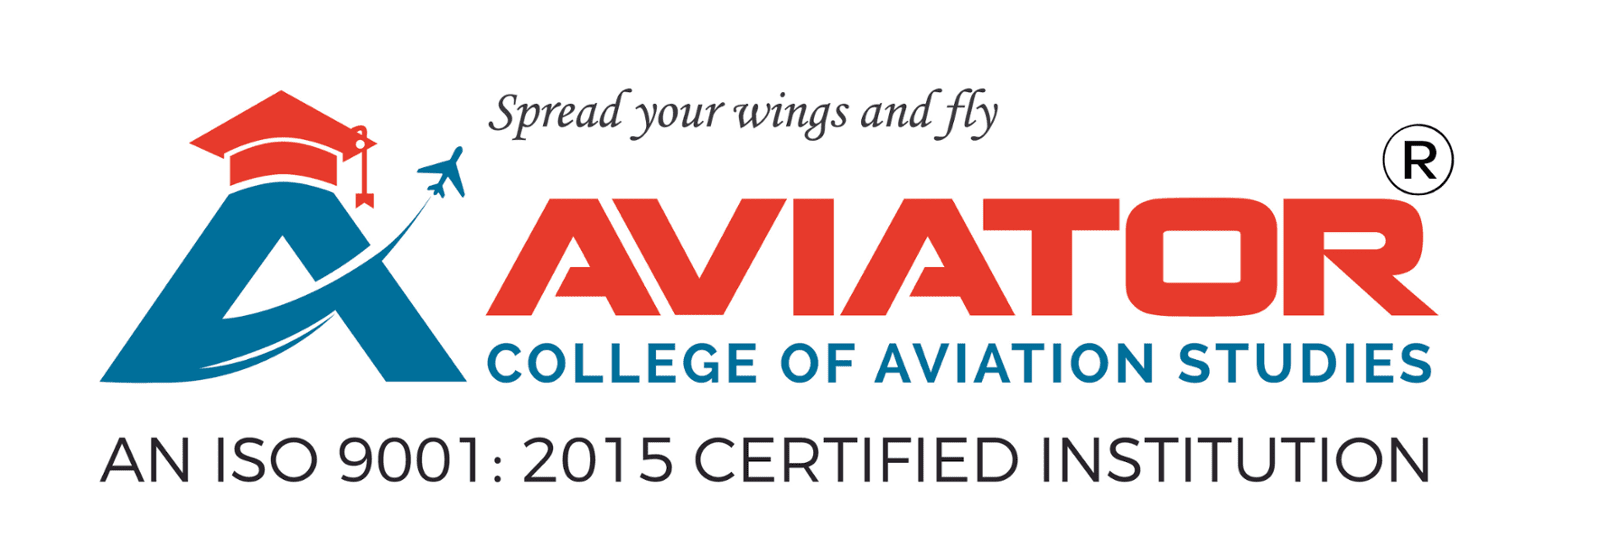 Aviator College of Aviation Studies